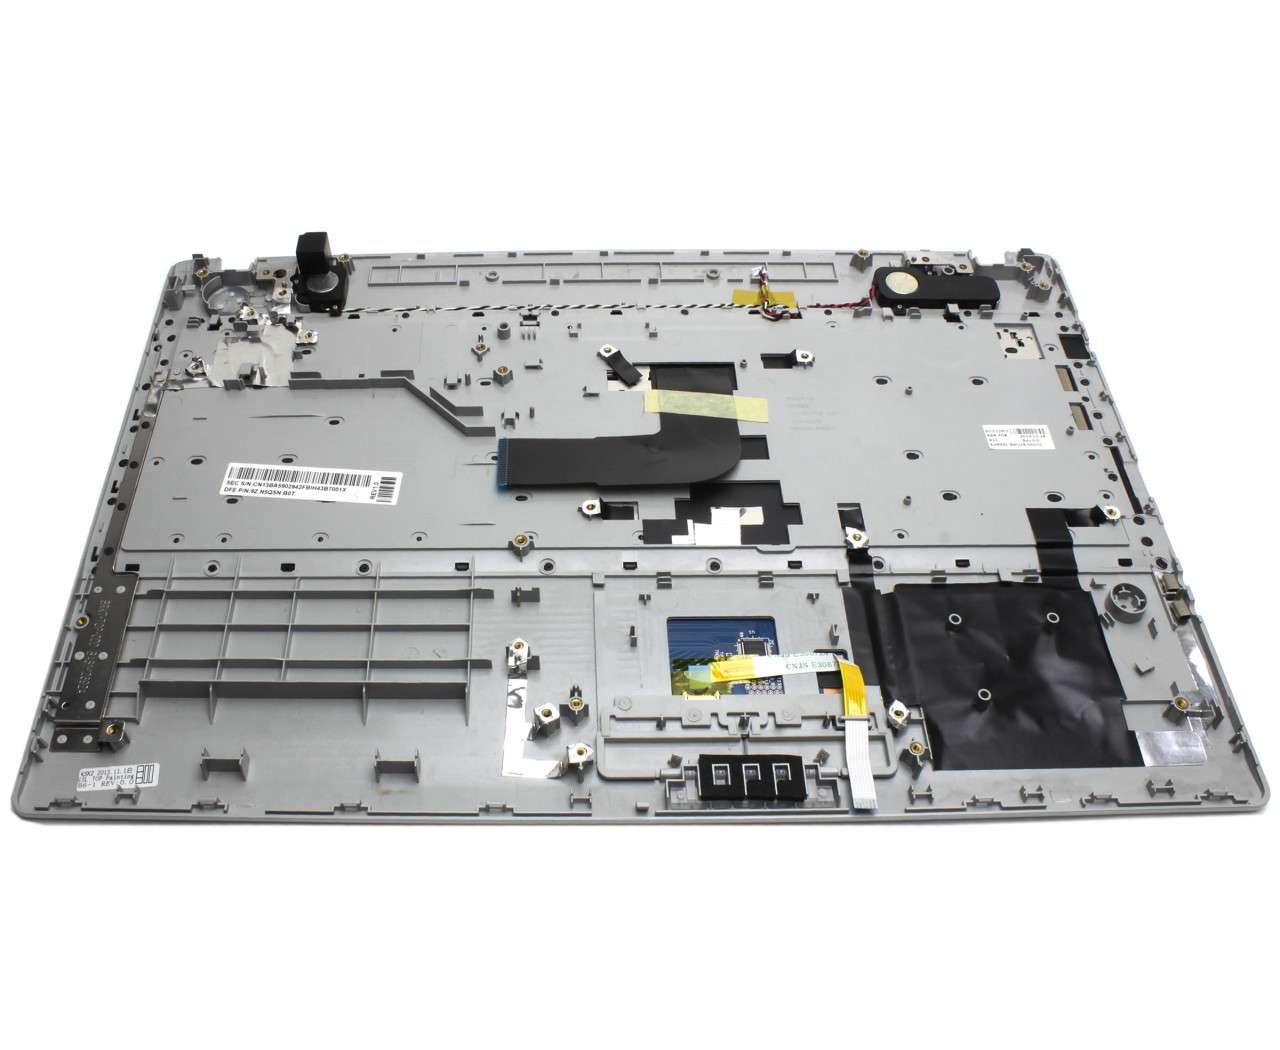 Tastatura Samsung NP RV520 neagra cu Palmrest argintiu imagine 2021 powerlaptop.ro